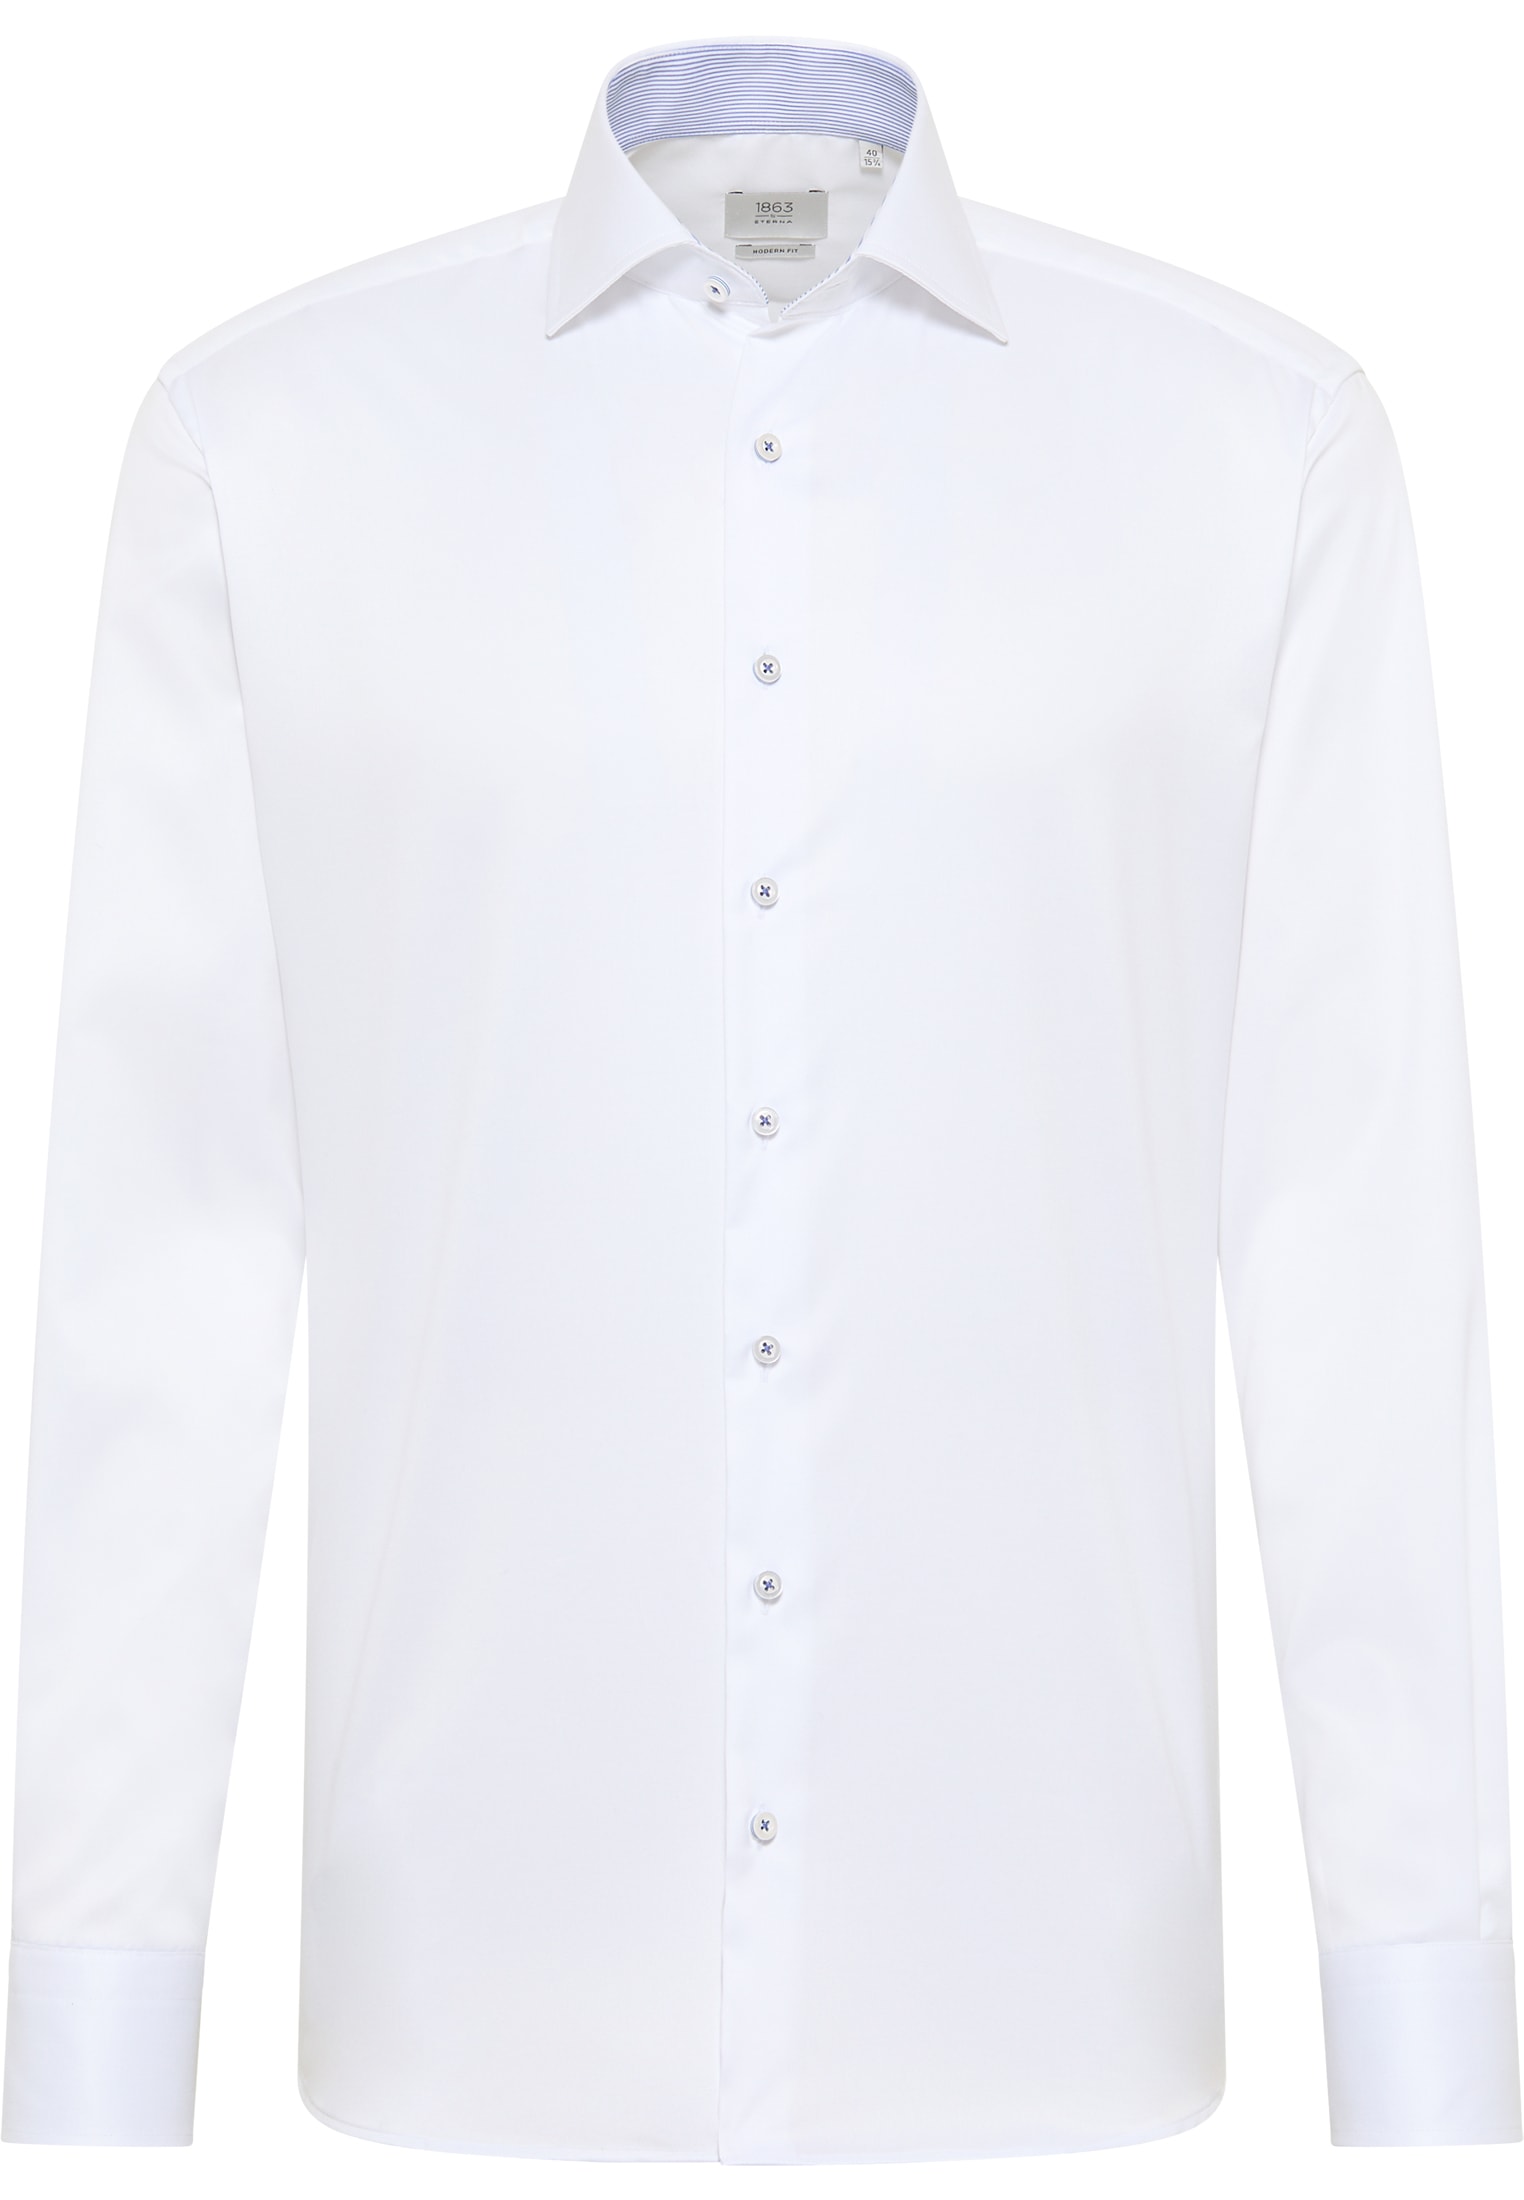 MODERN FIT Luxury Shirt in wit vlakte